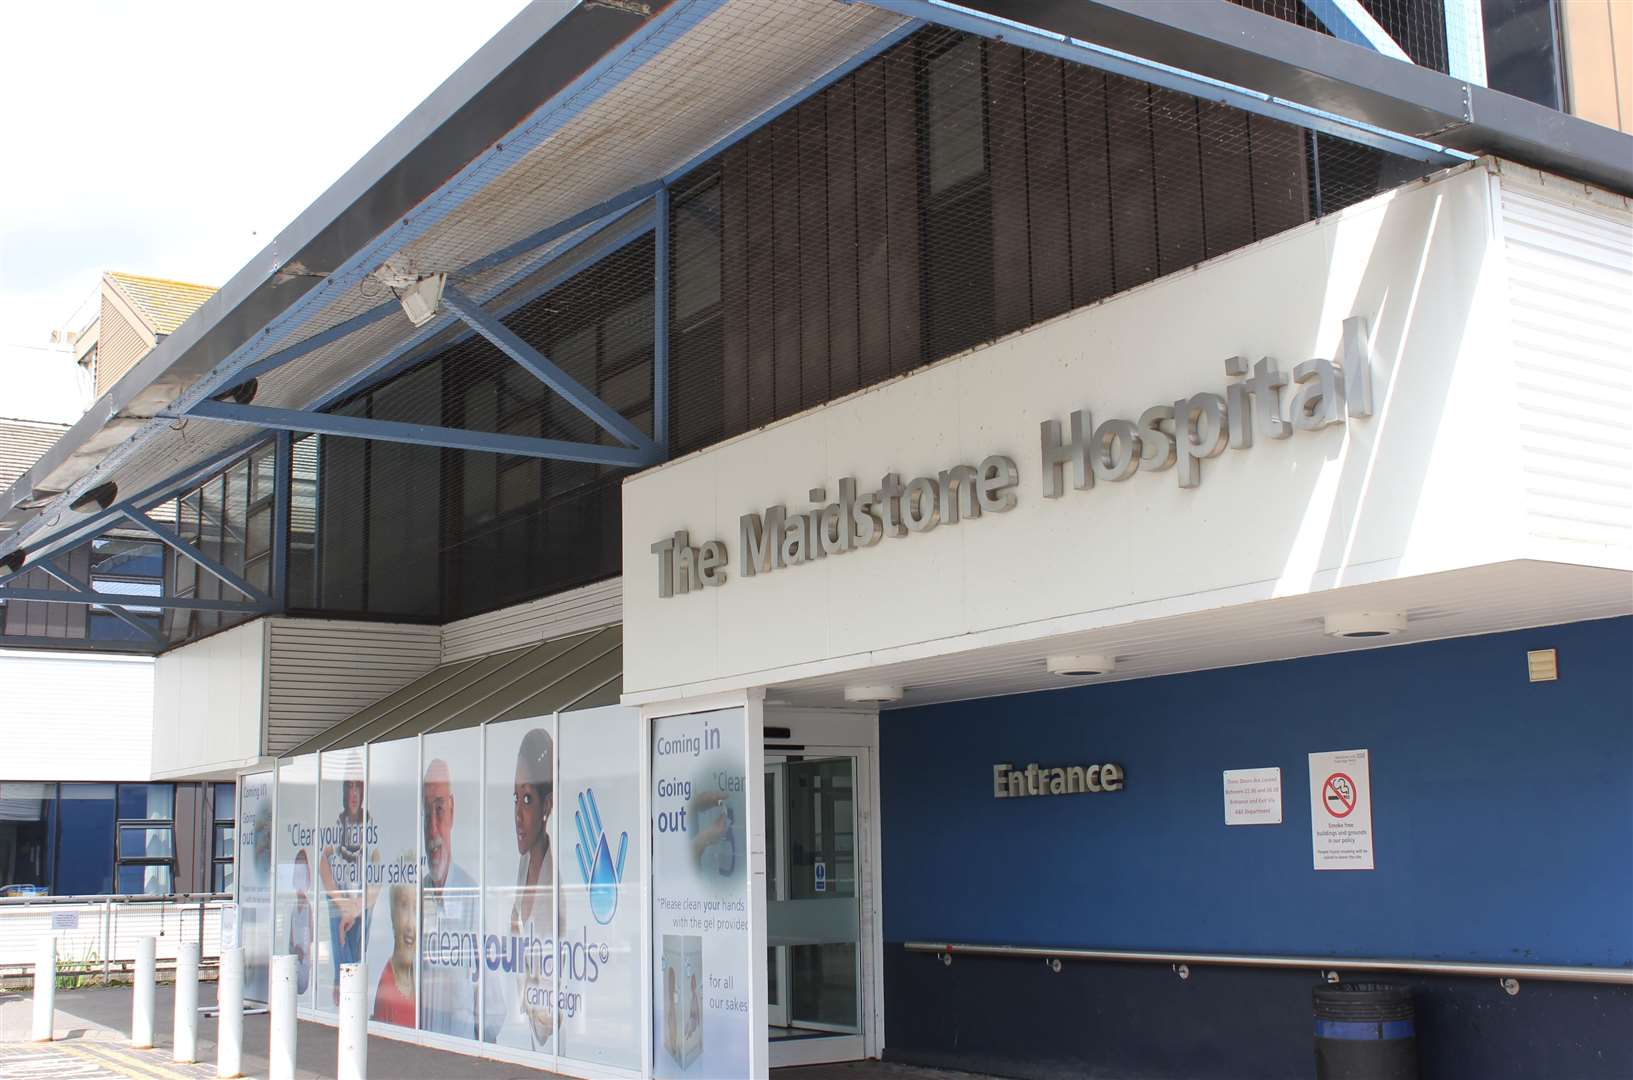 Maidstone Hospital has passed its second wave peak